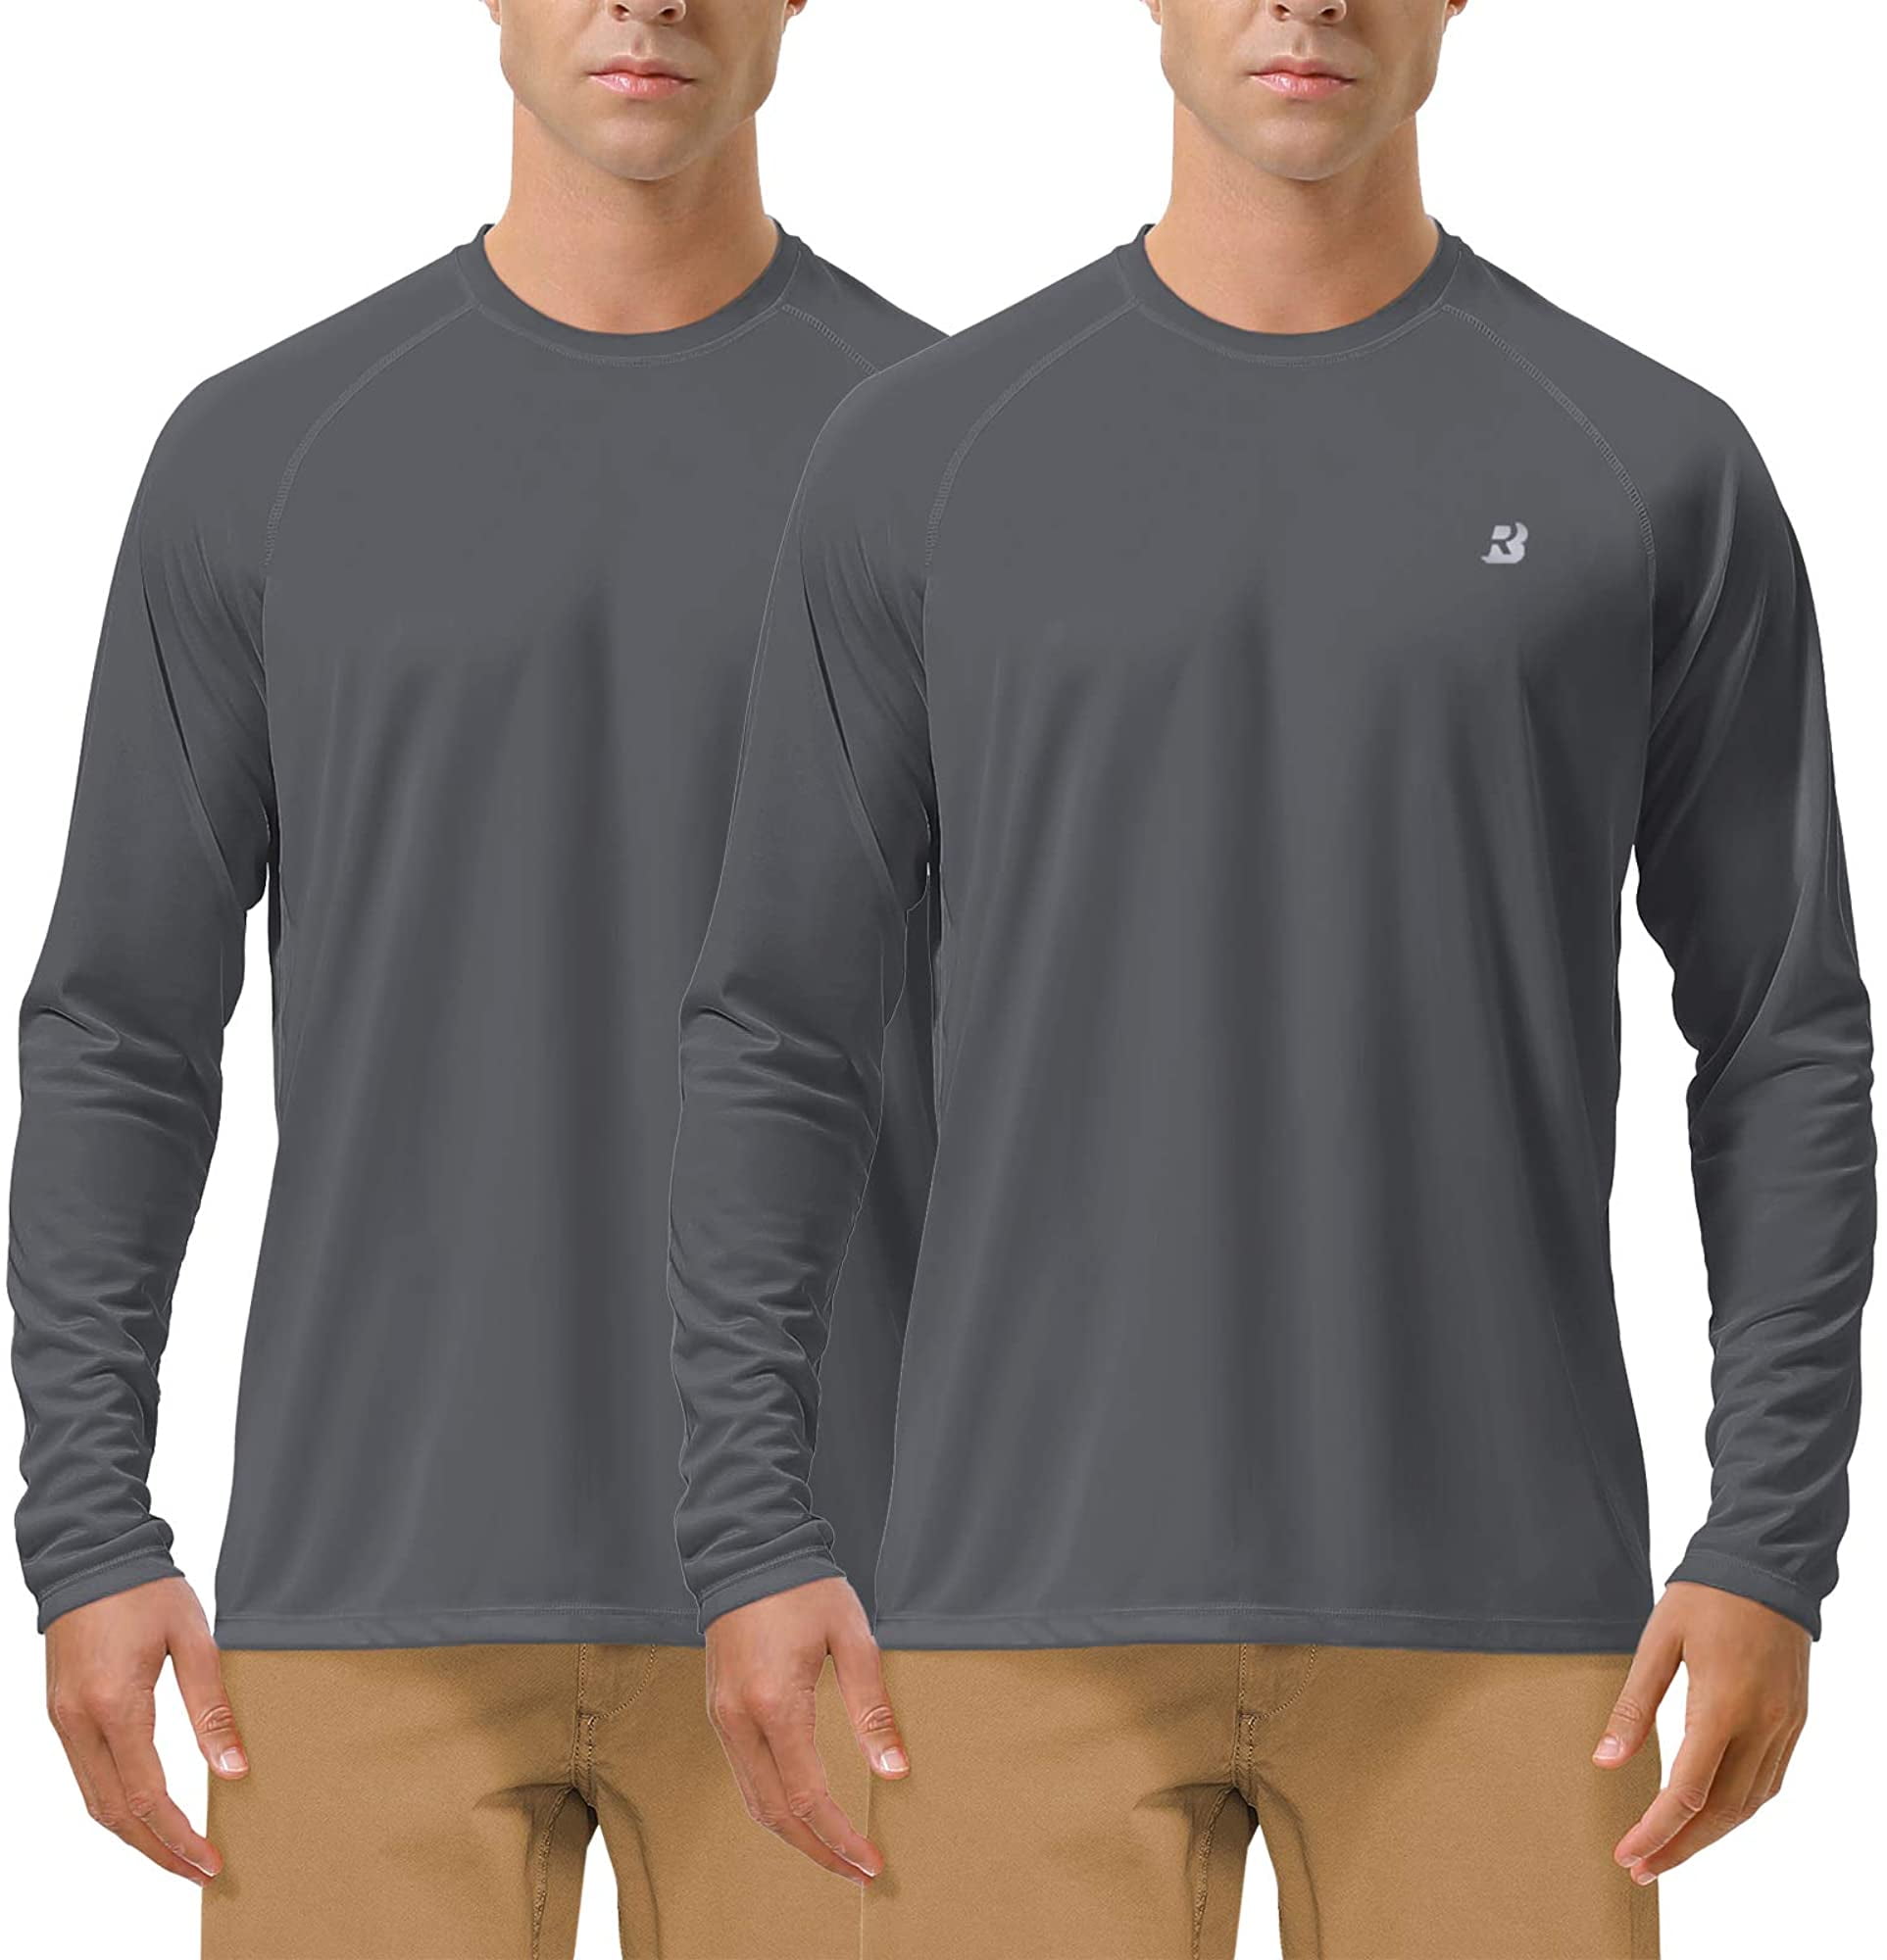 Roadbox 2 Pack UPF 50+ Fishing Shirts for Men Long Sleeve UV Sun Protection  Tee Tops